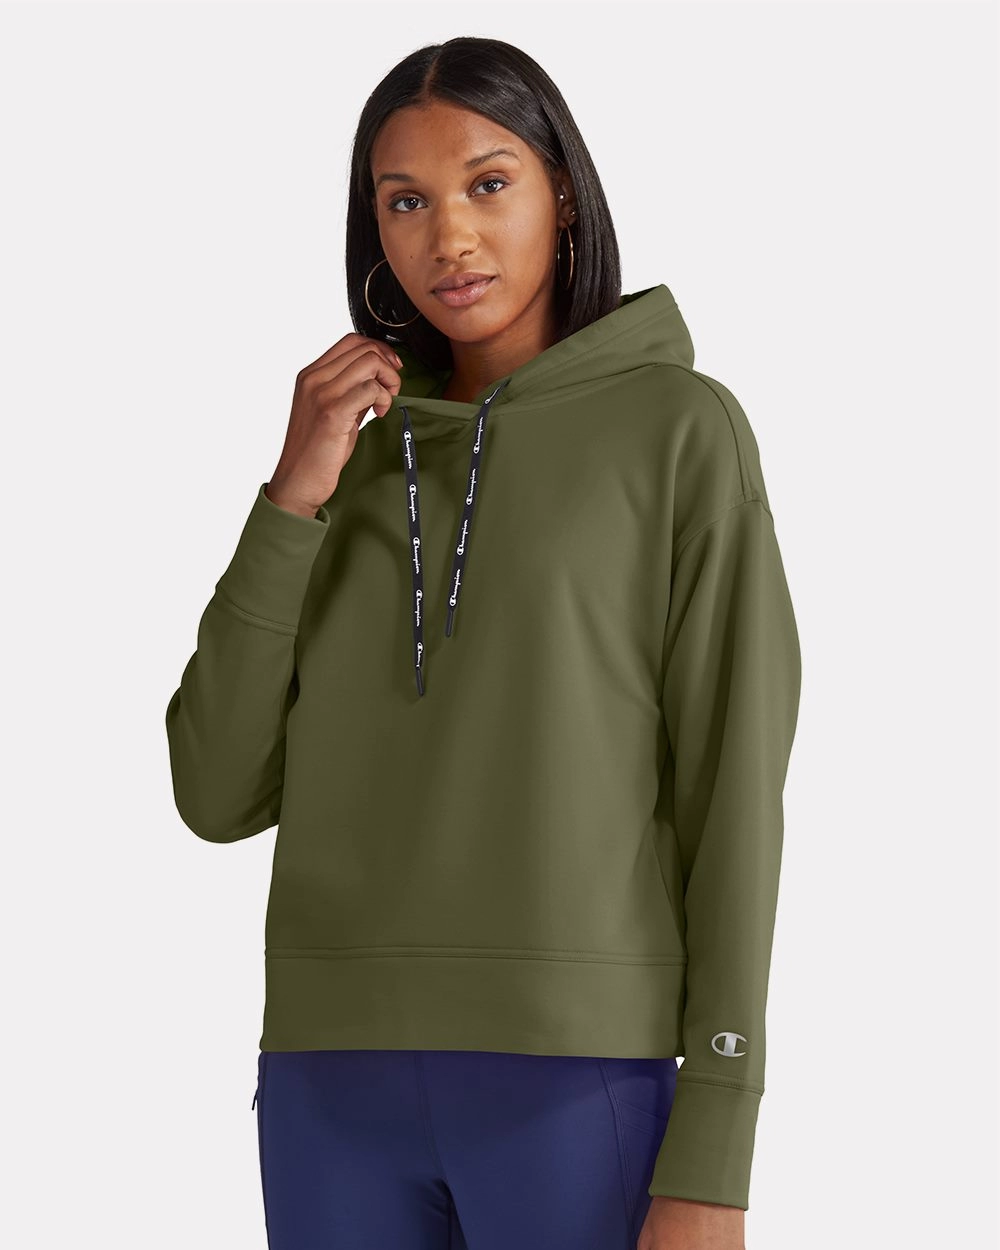 Løfte elev blad Champion Clothing CHP100 Women's Sport Hooded Sweatshirt - From $31.26